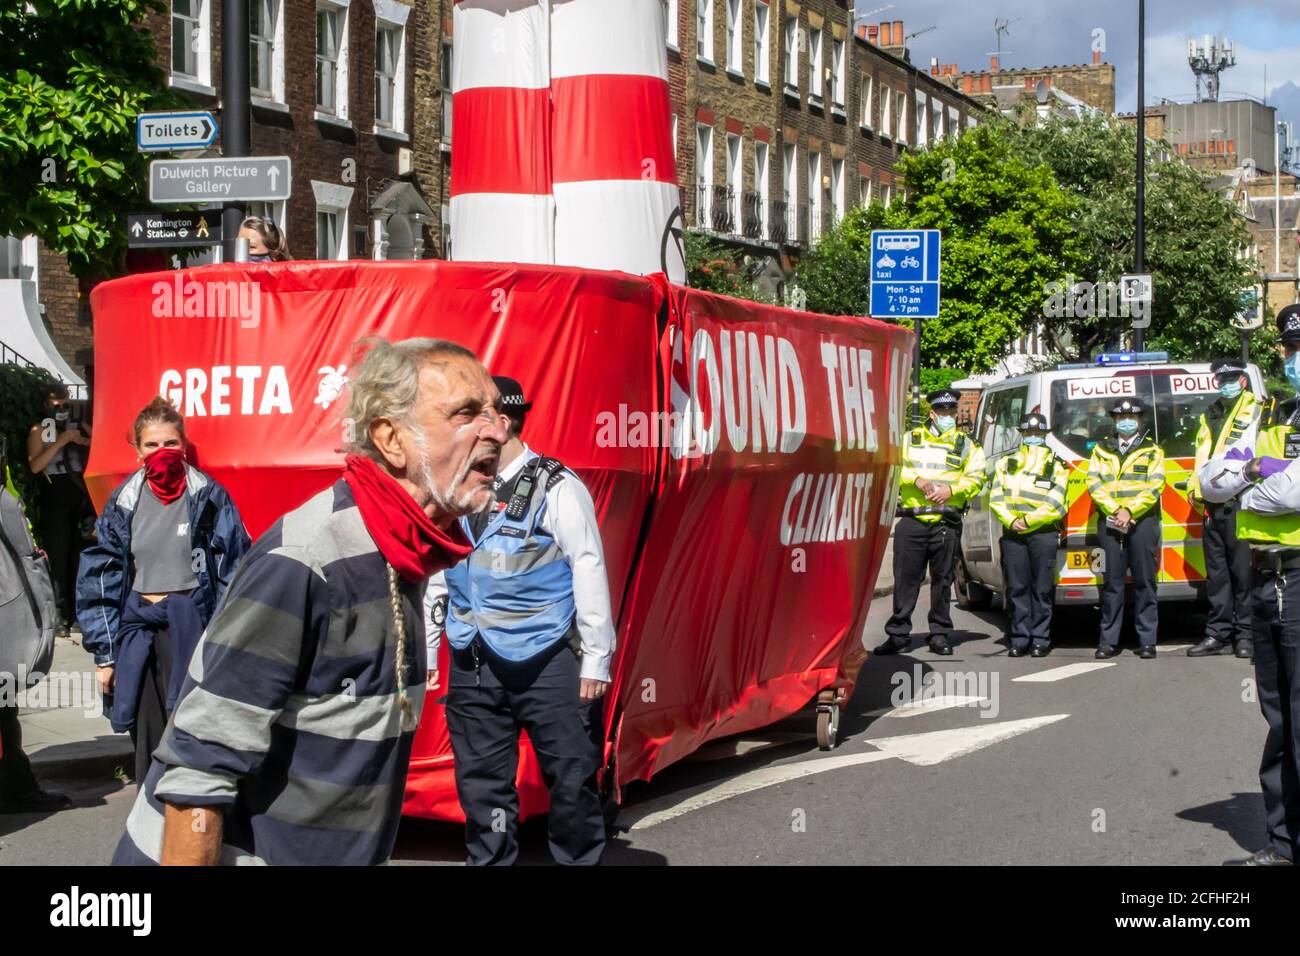 KENNINGTON, LONDON/ENGLAND - 5 September 2020: Extinction Rebellion with “Lightship Greta” during a protest Stock Photo